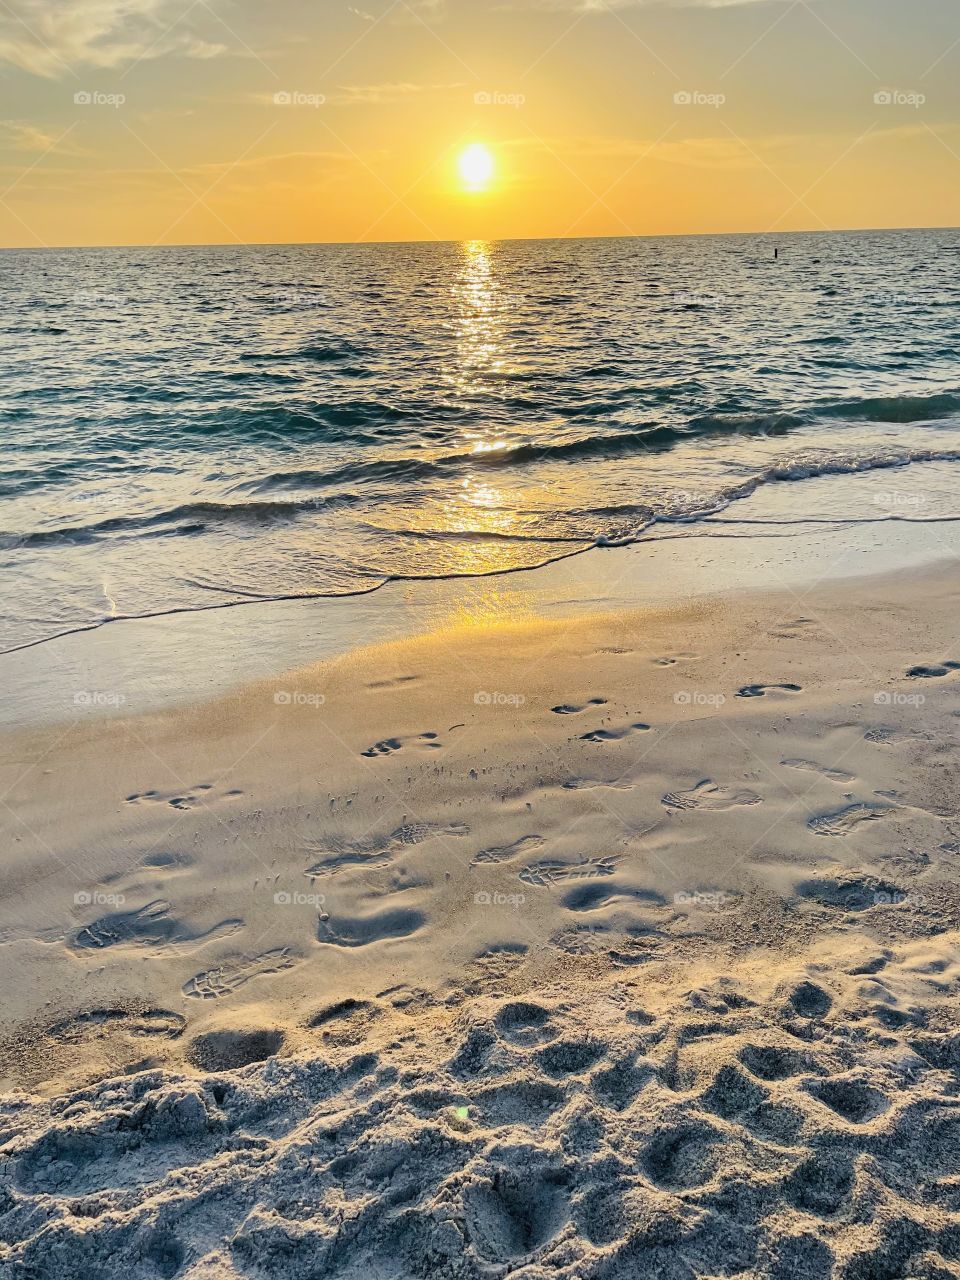 A beautiful walk on the beach at sunset 